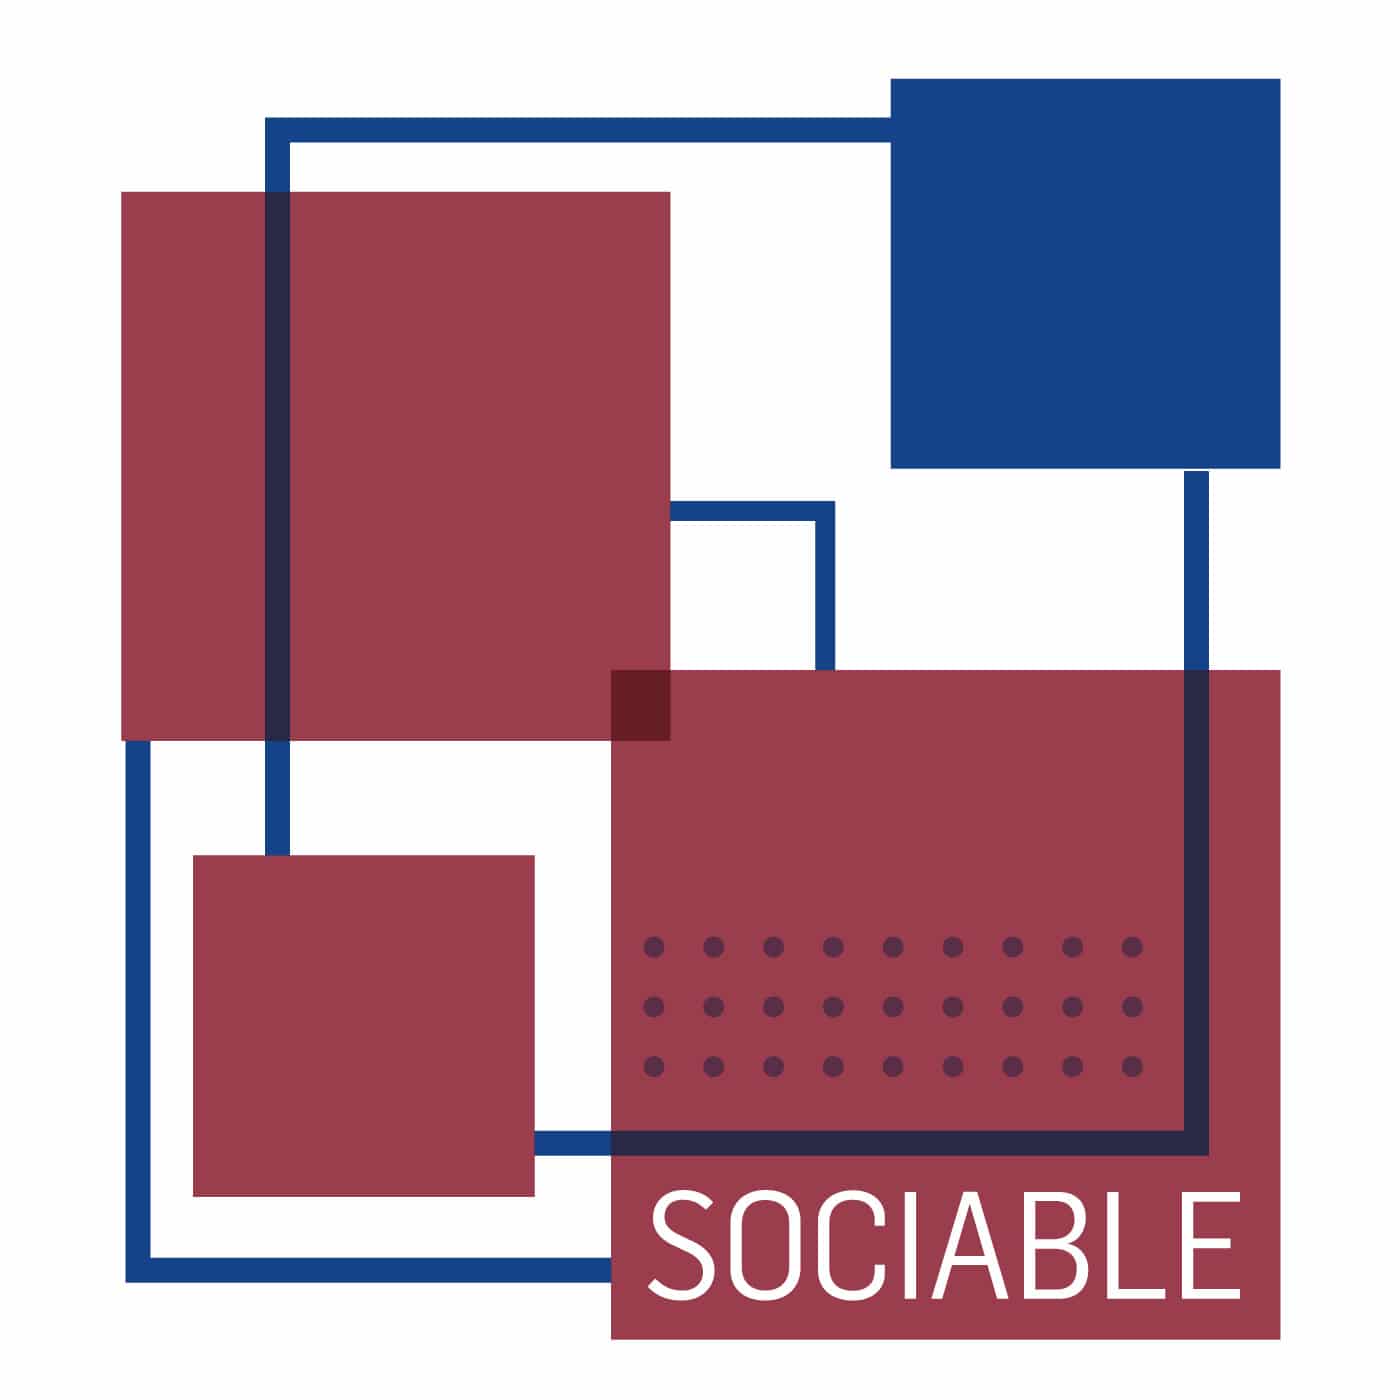 Interconected squares representing sociability